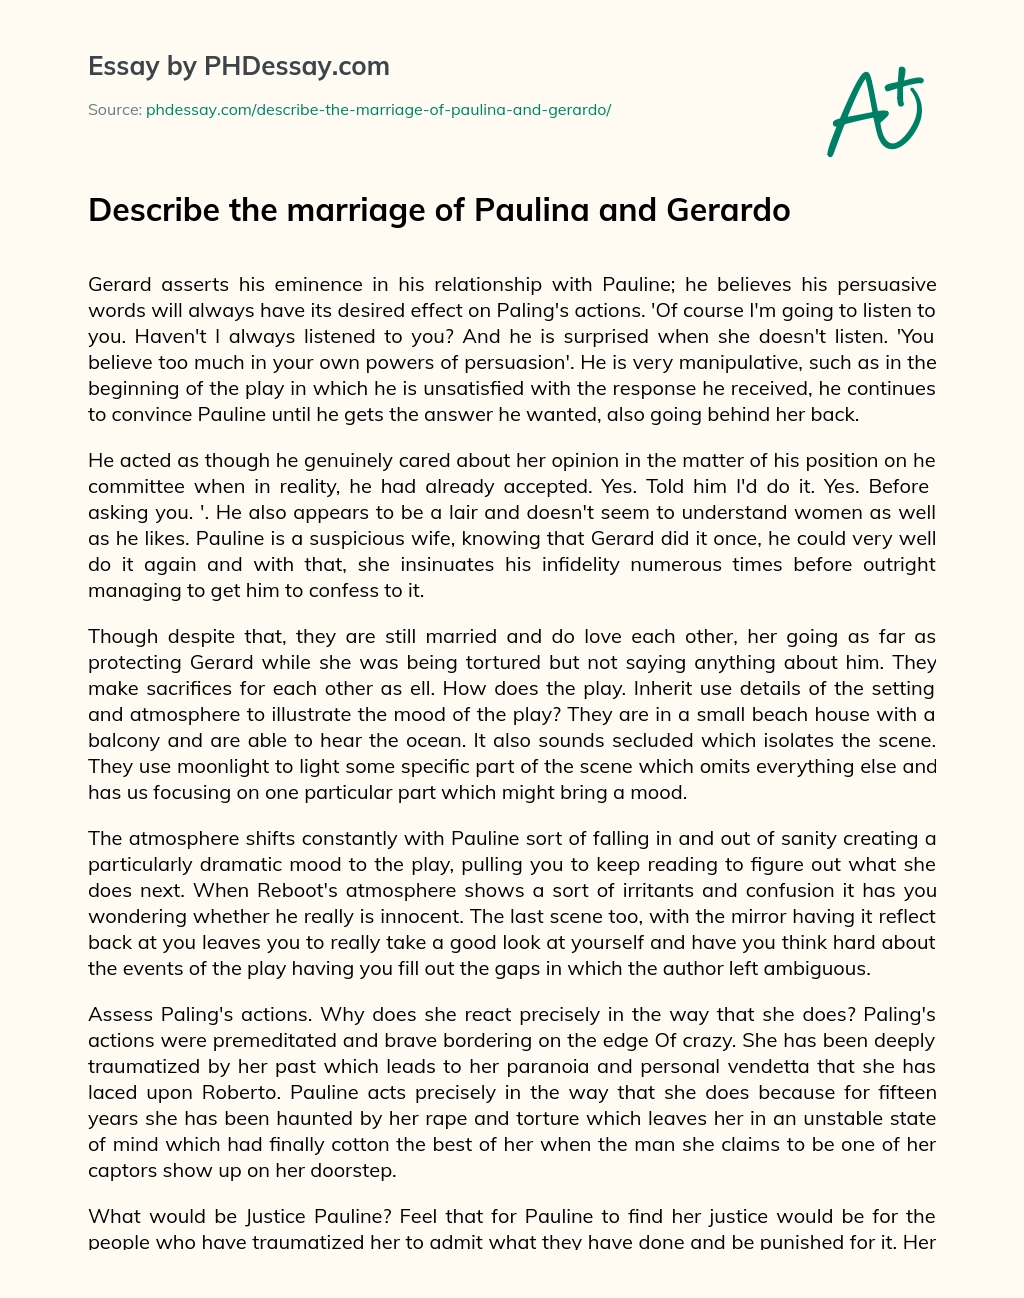 Describe the Marriage of Paulina and Gerardo essay